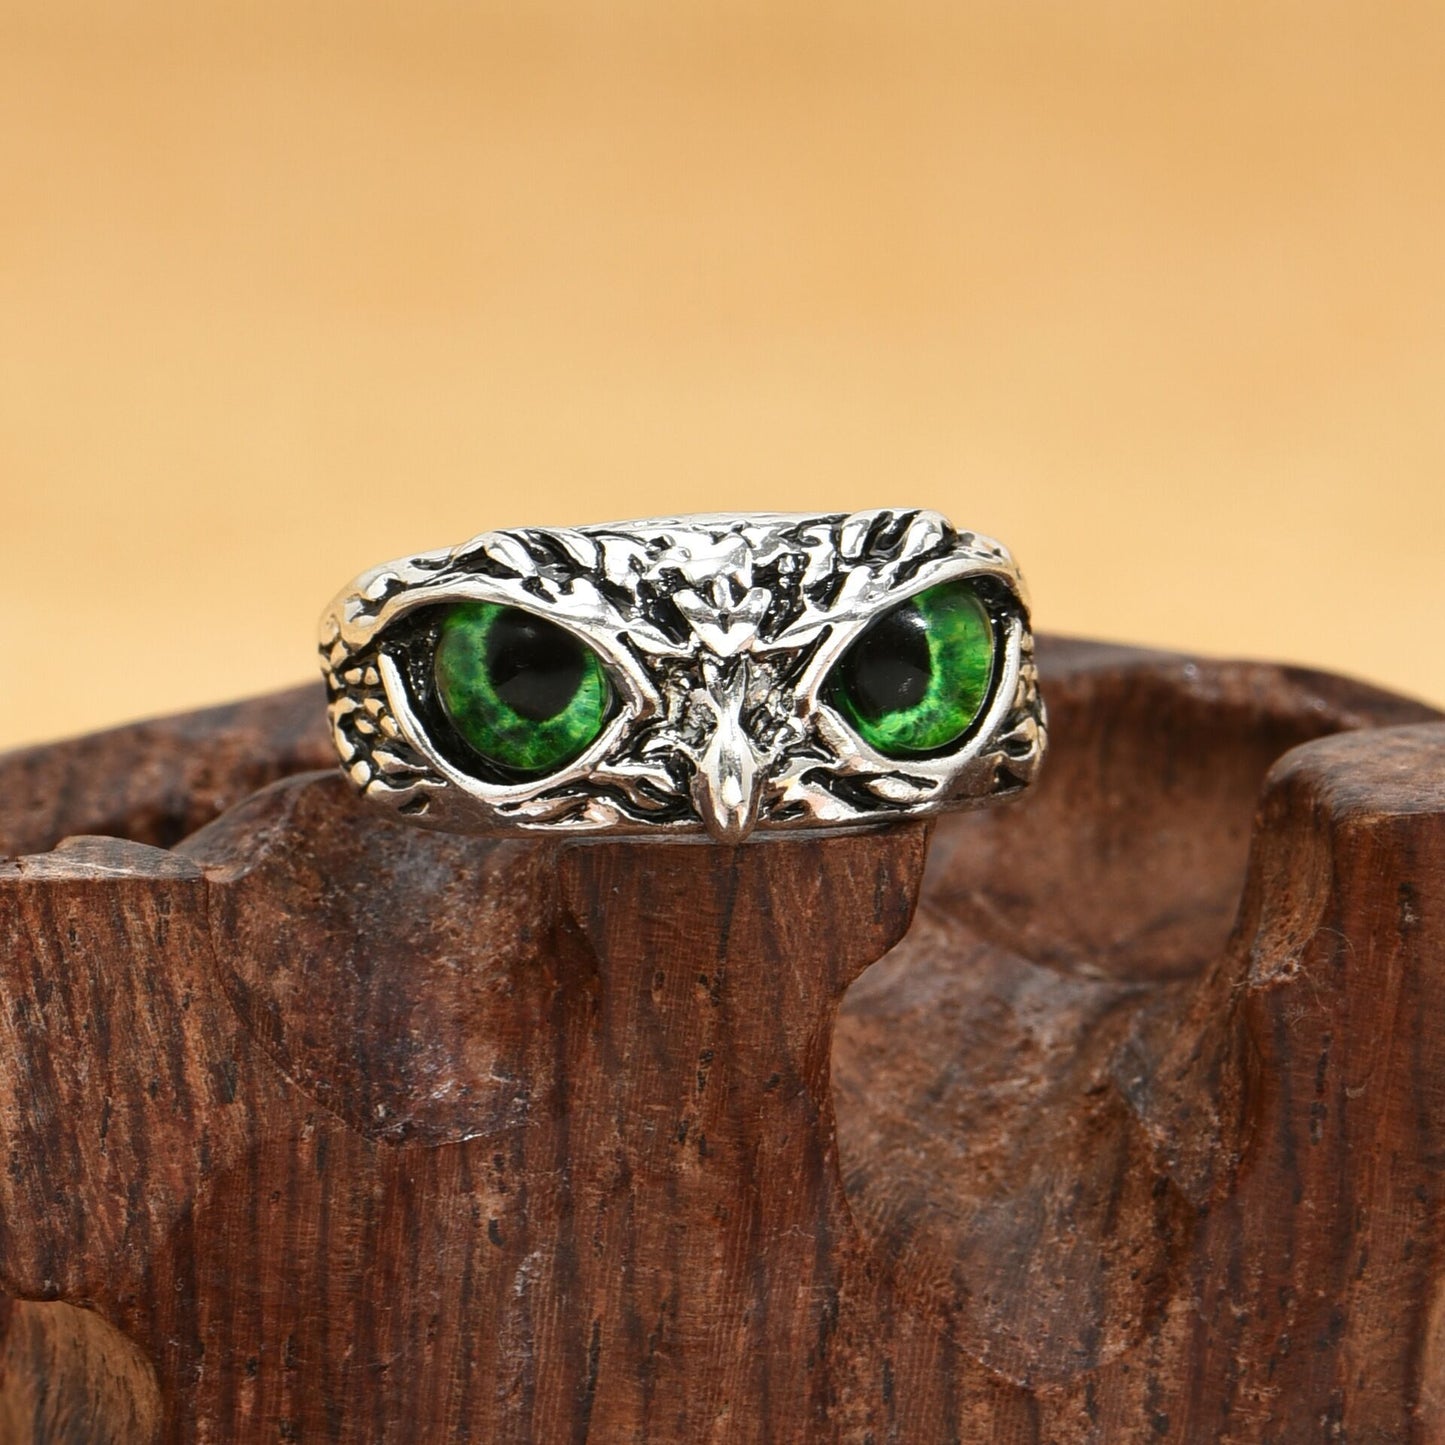 Vintage Owl Ring Adjustable Ring